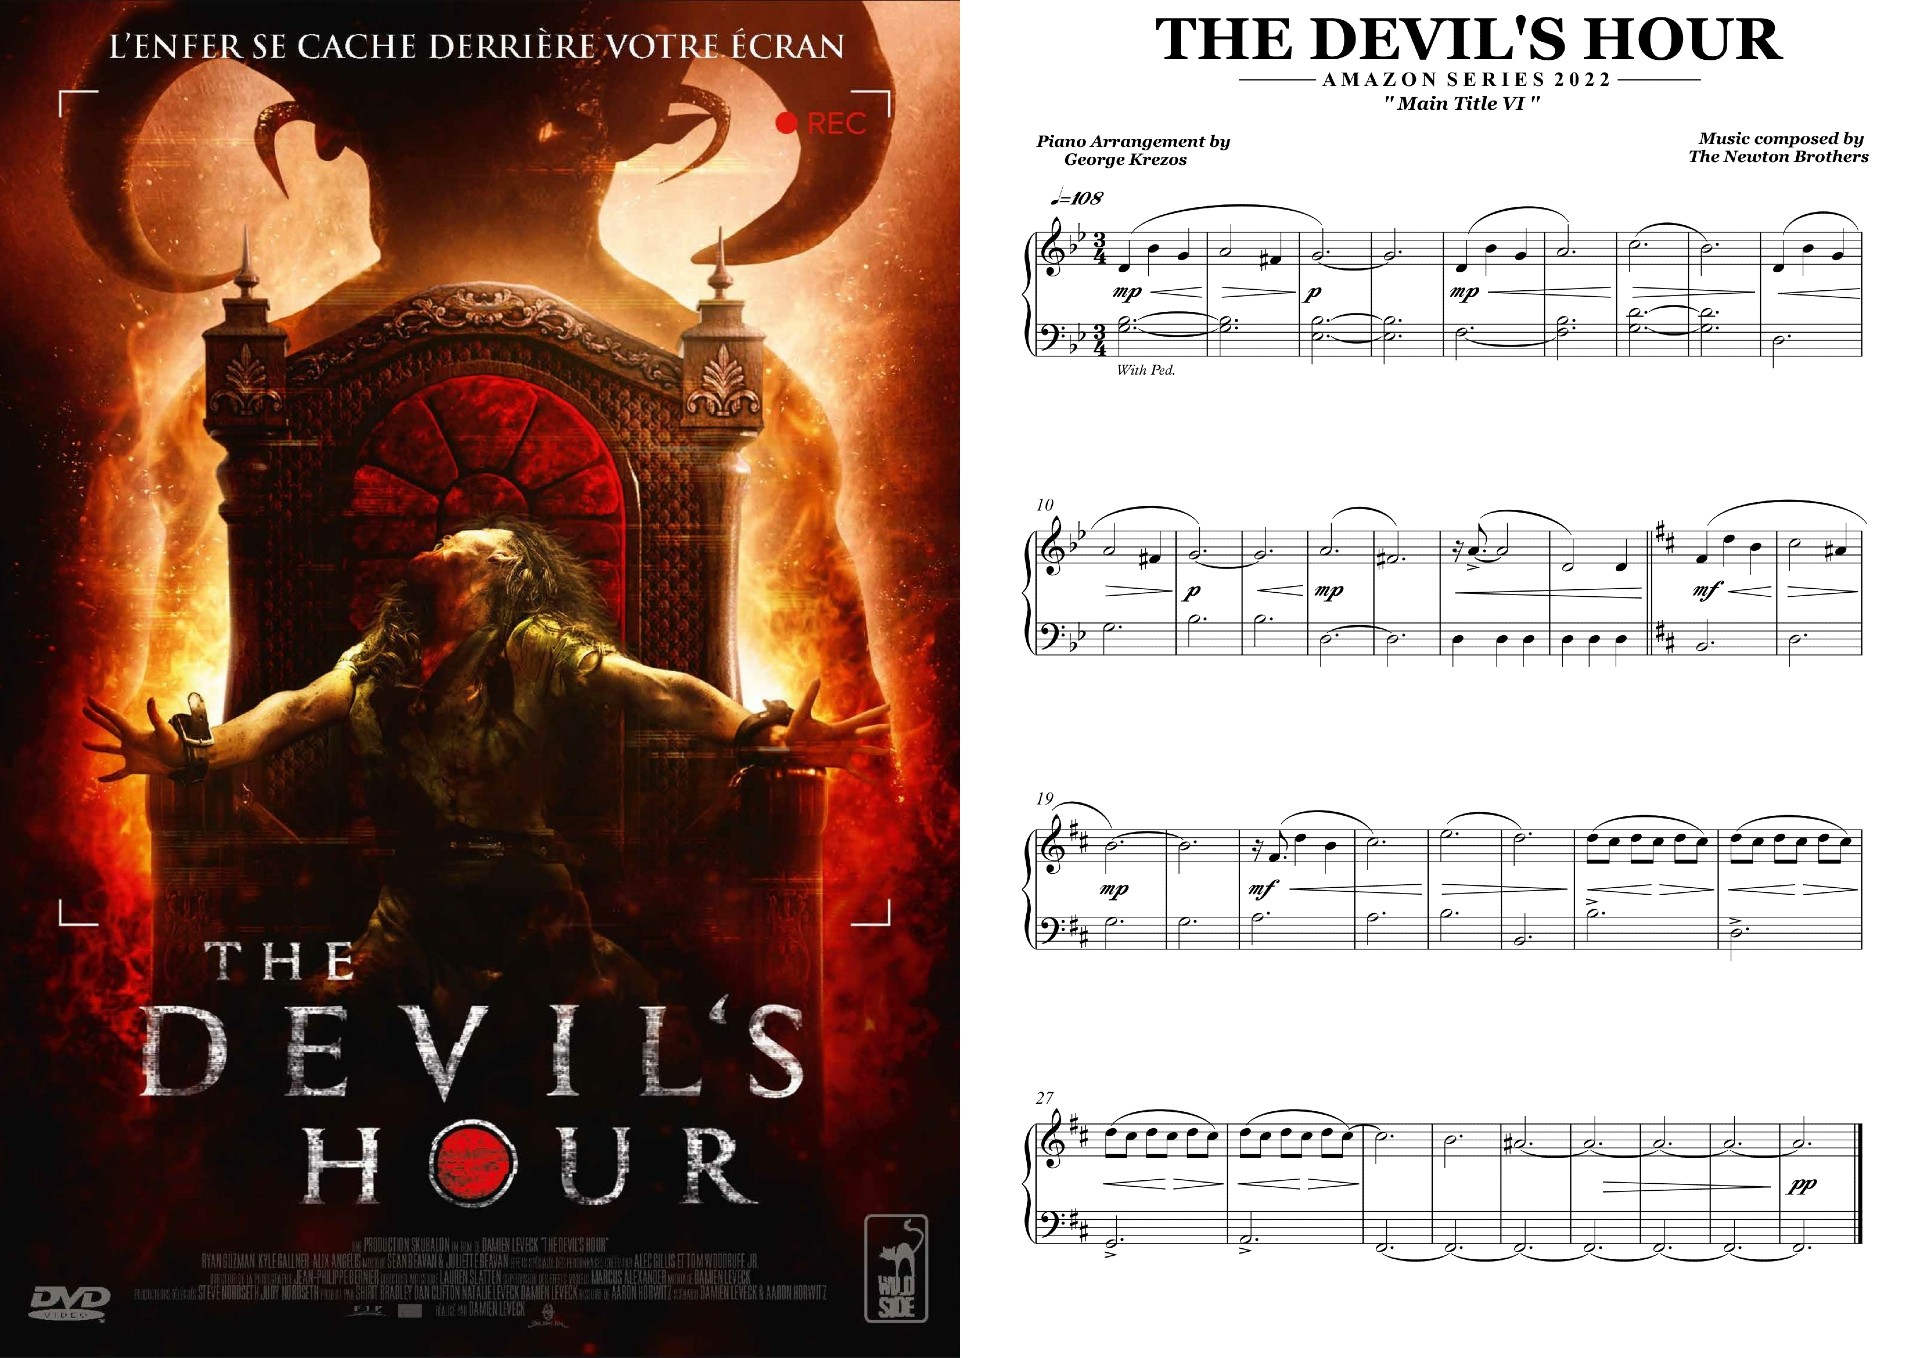 THE DEVIL'S HOUR - Main Title VI